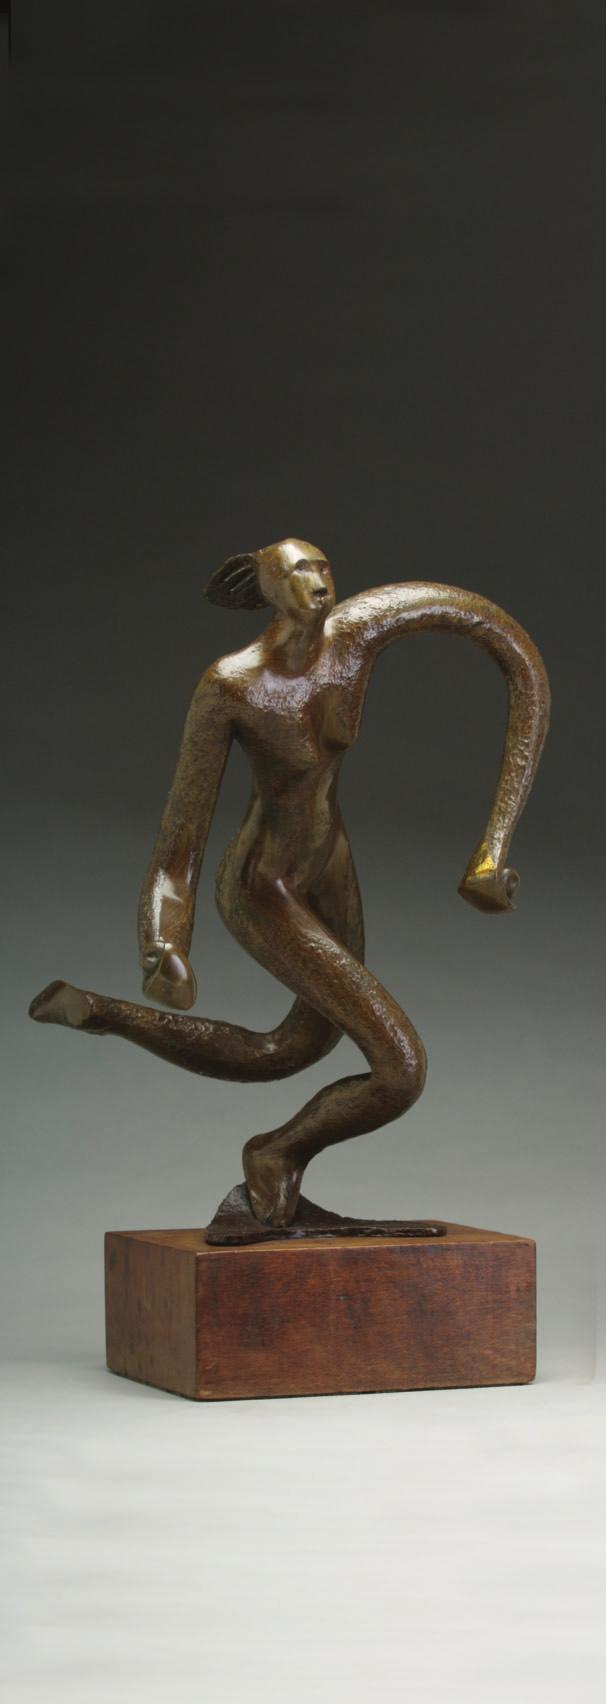 Leon Underwood (1890-1975) Atalanta, 1938. Bronze with a dark brown patina.